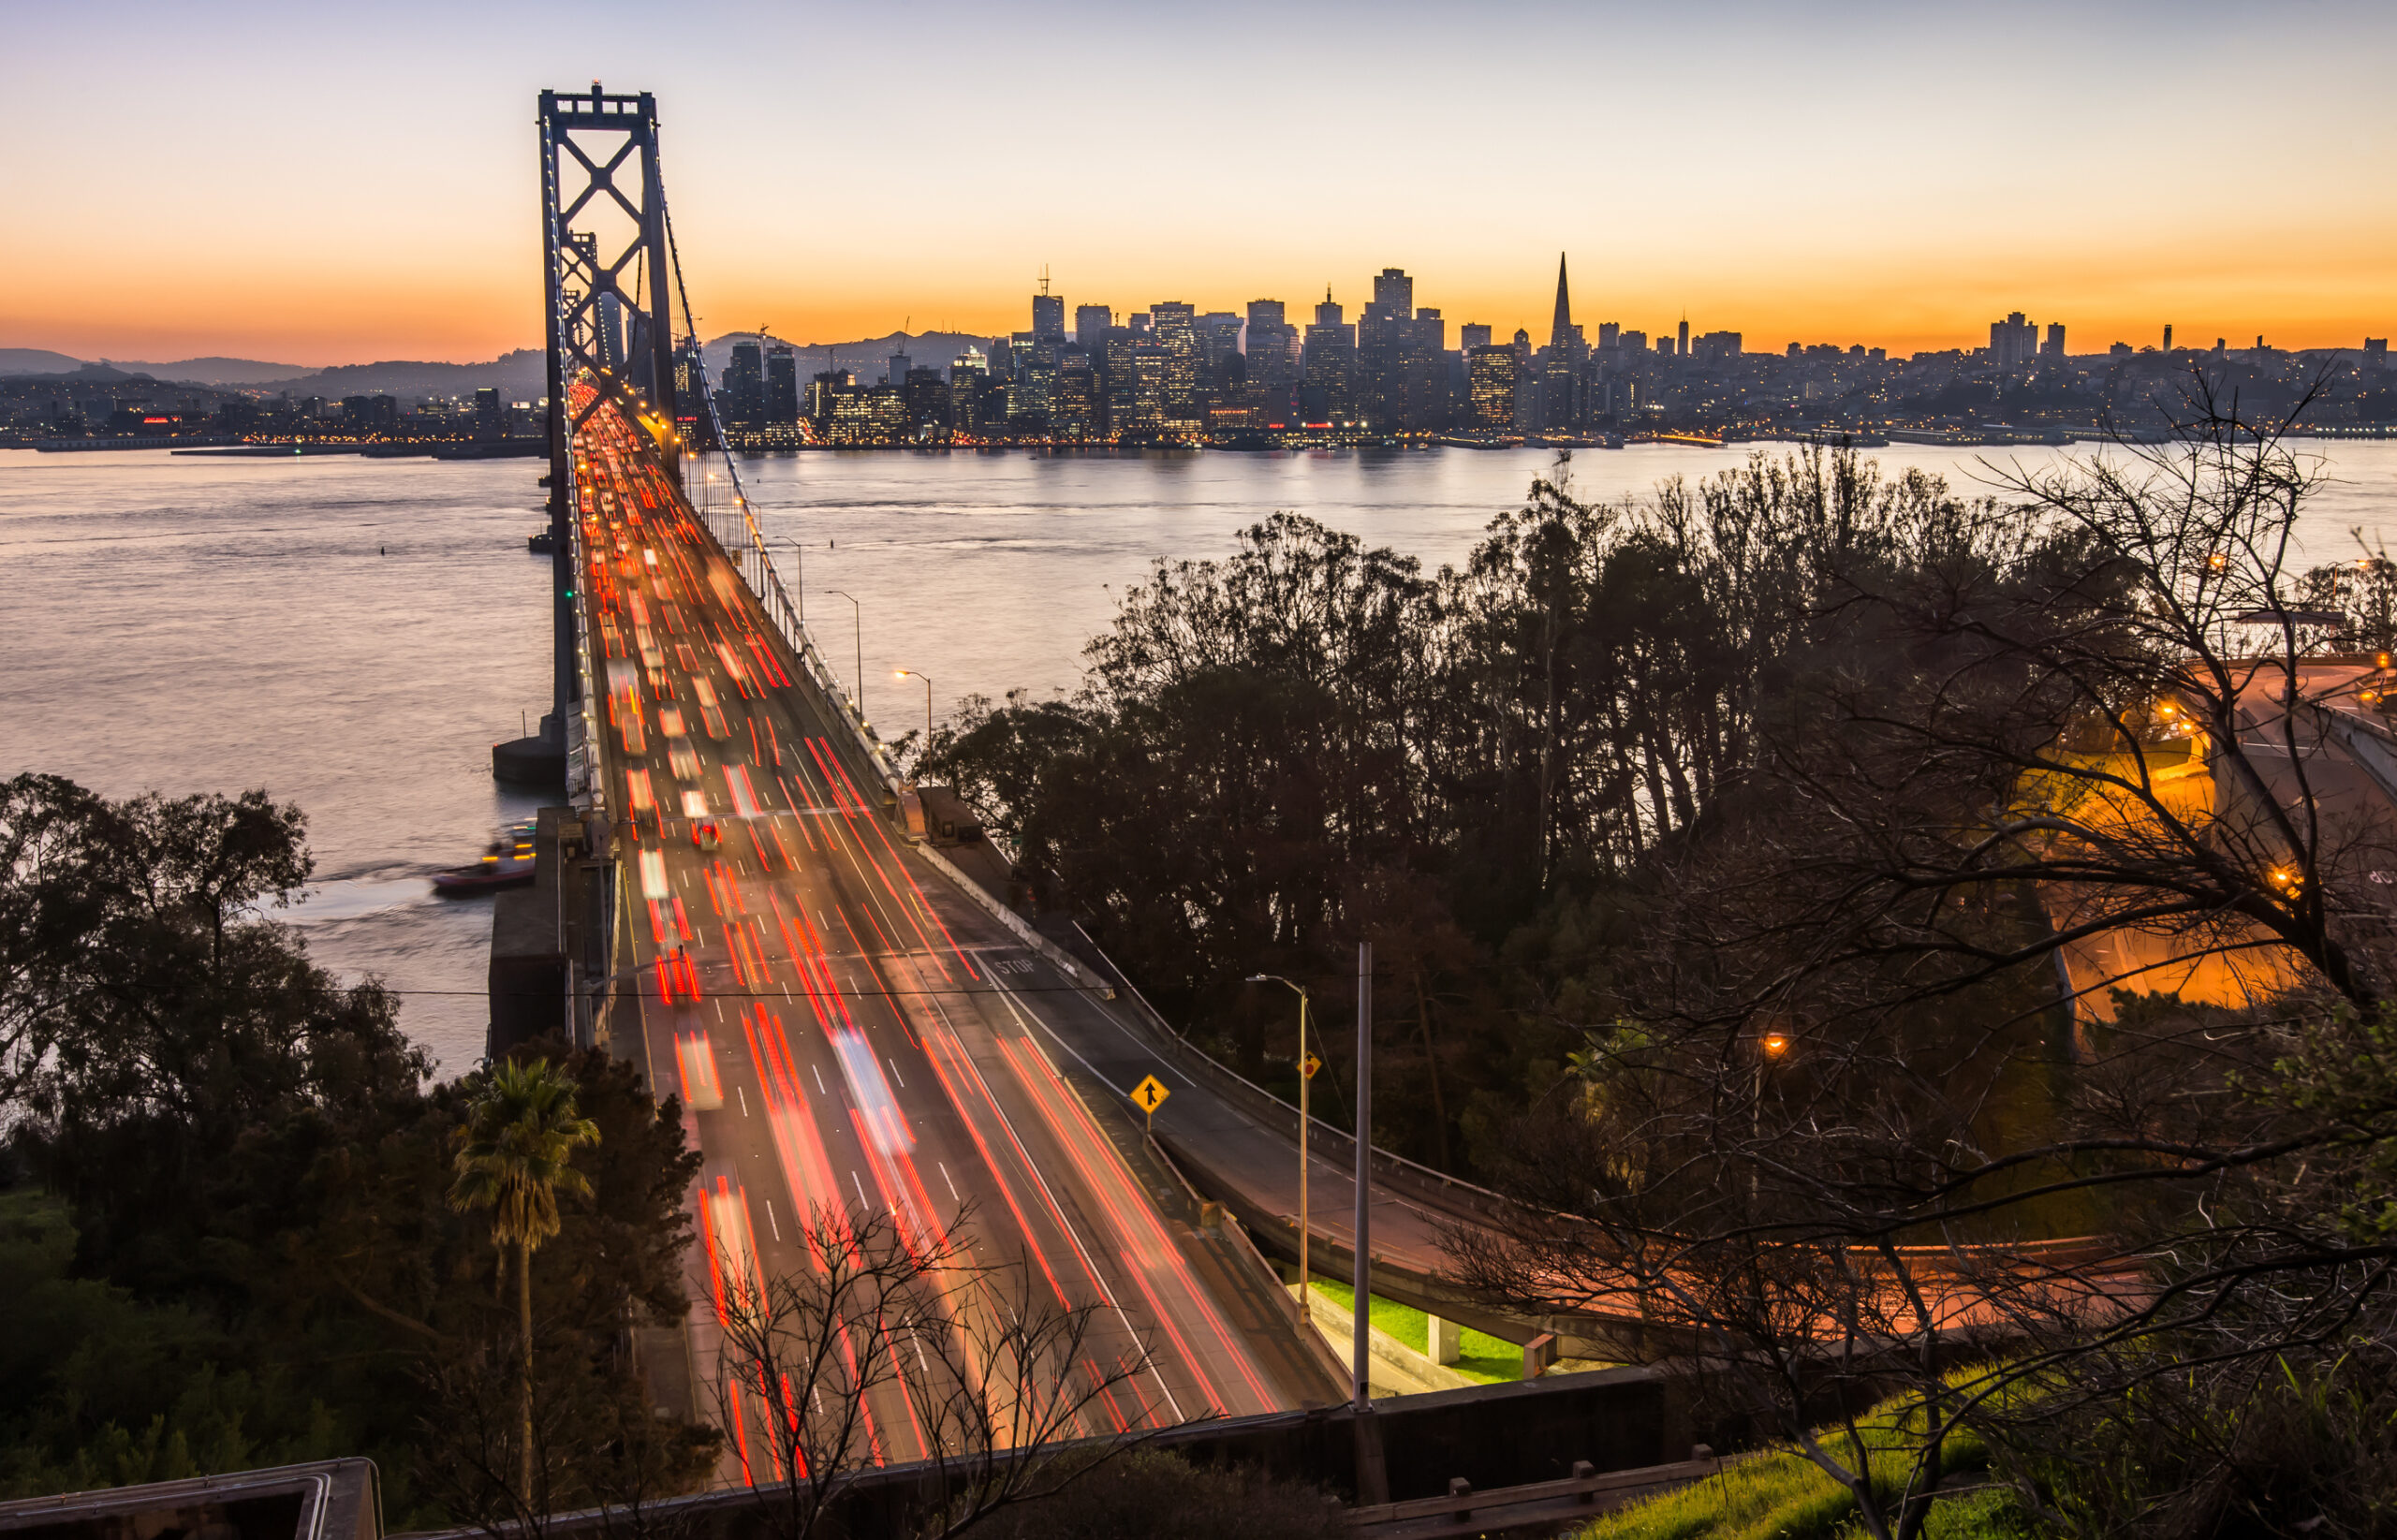 Why Isn’t There a Bus Lane on San Francisco’s Bay Bridge?